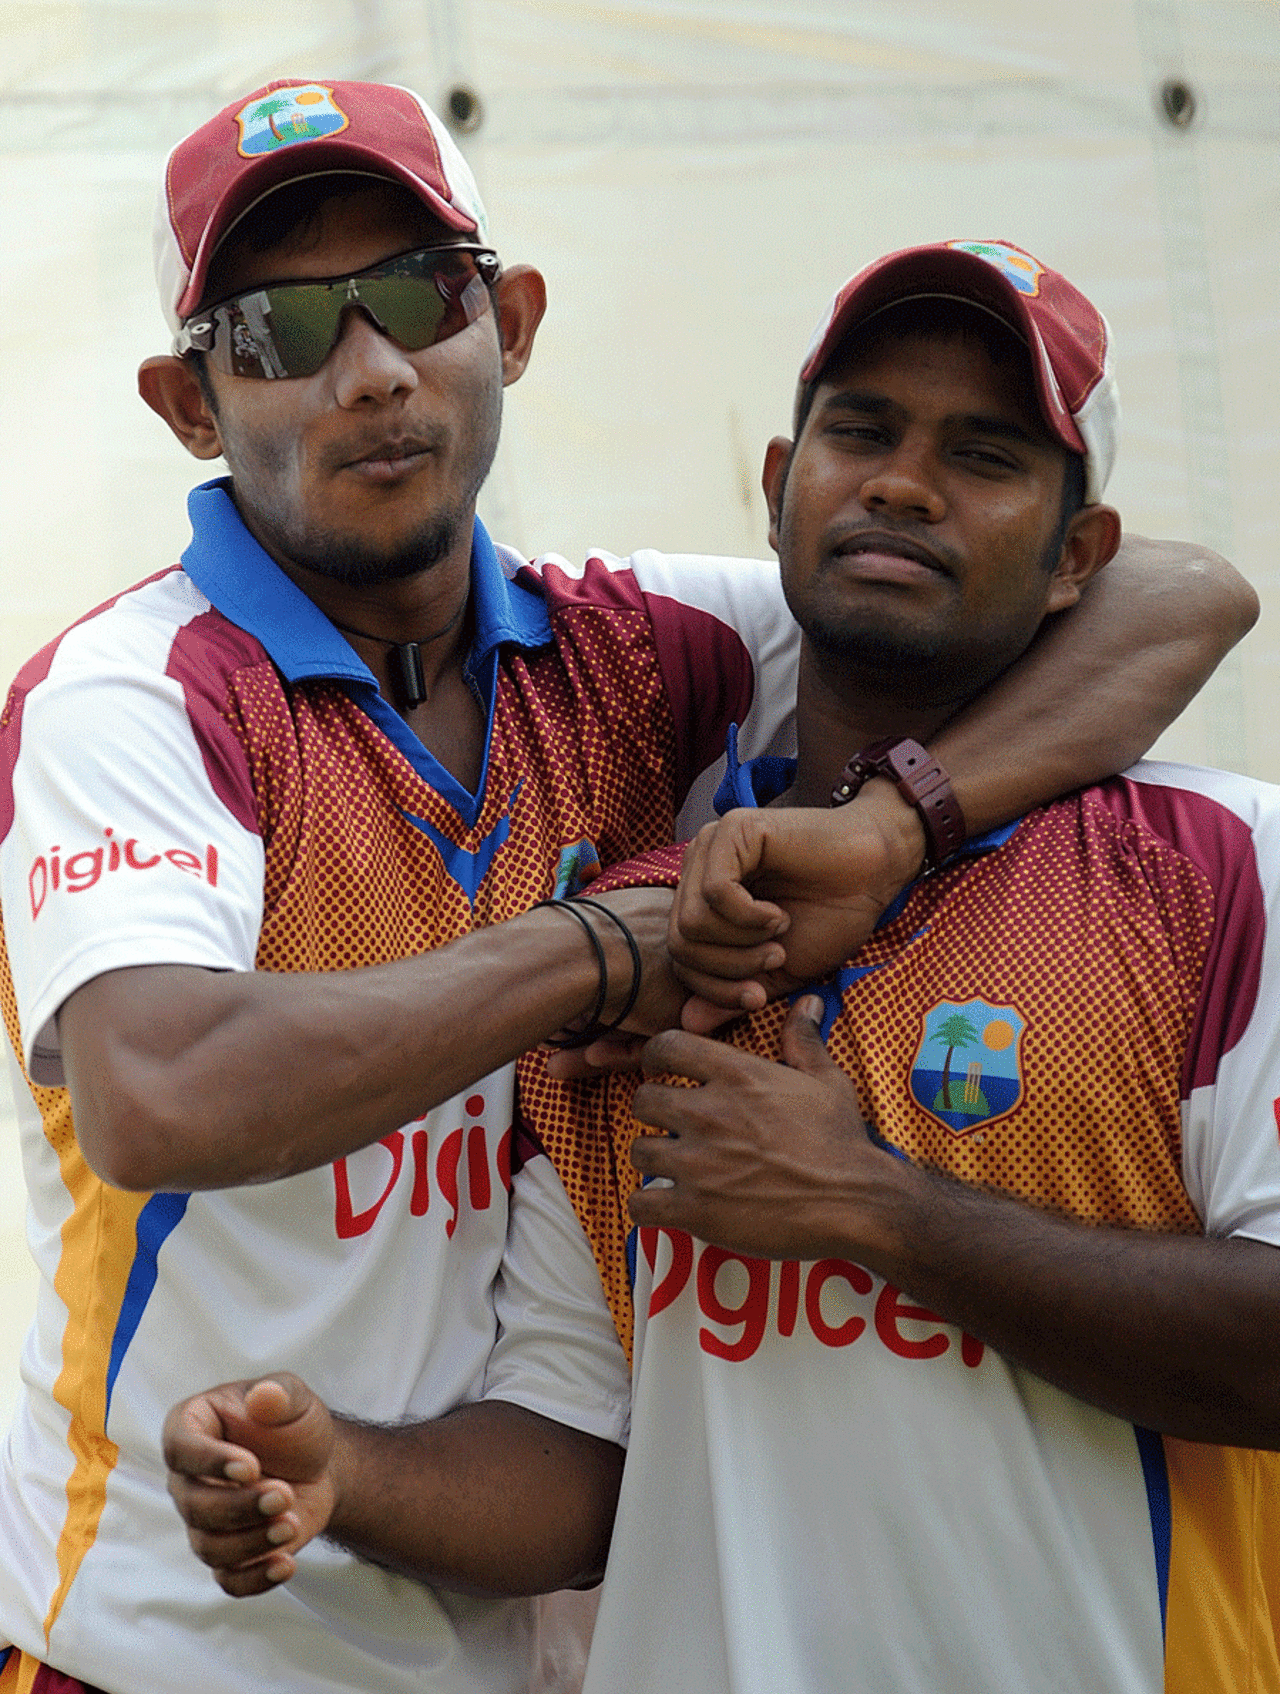 Davendra Bishoo has his arm around Adrian Barath, New Delhi, November 5, 2011